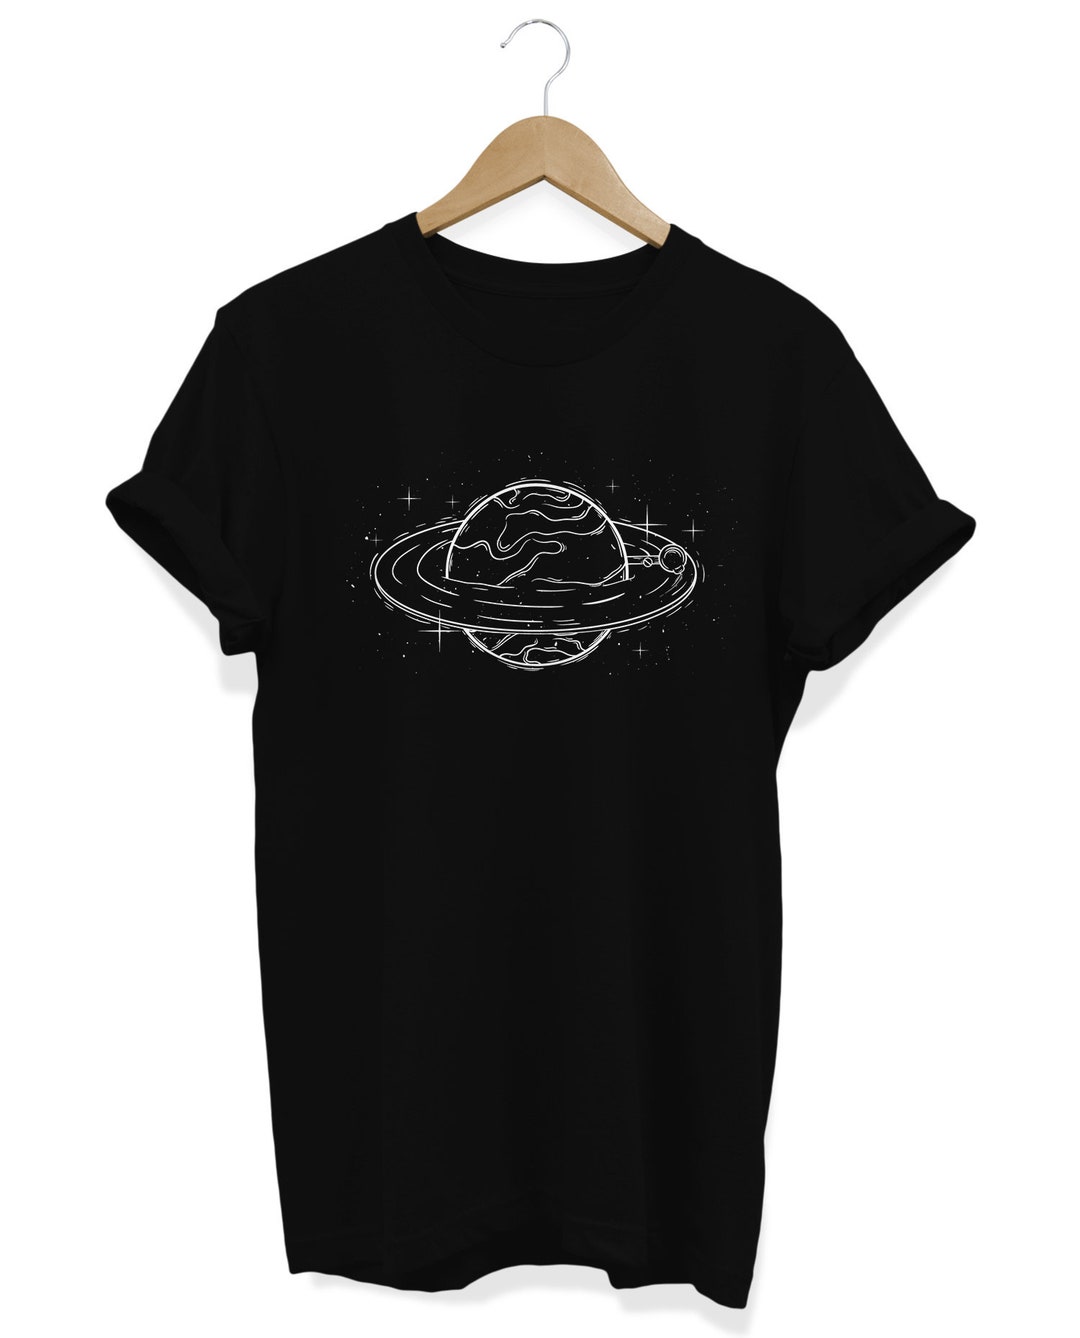 LP Record Tshirt Aesthetic Clothing Grunge Shirt - Etsy